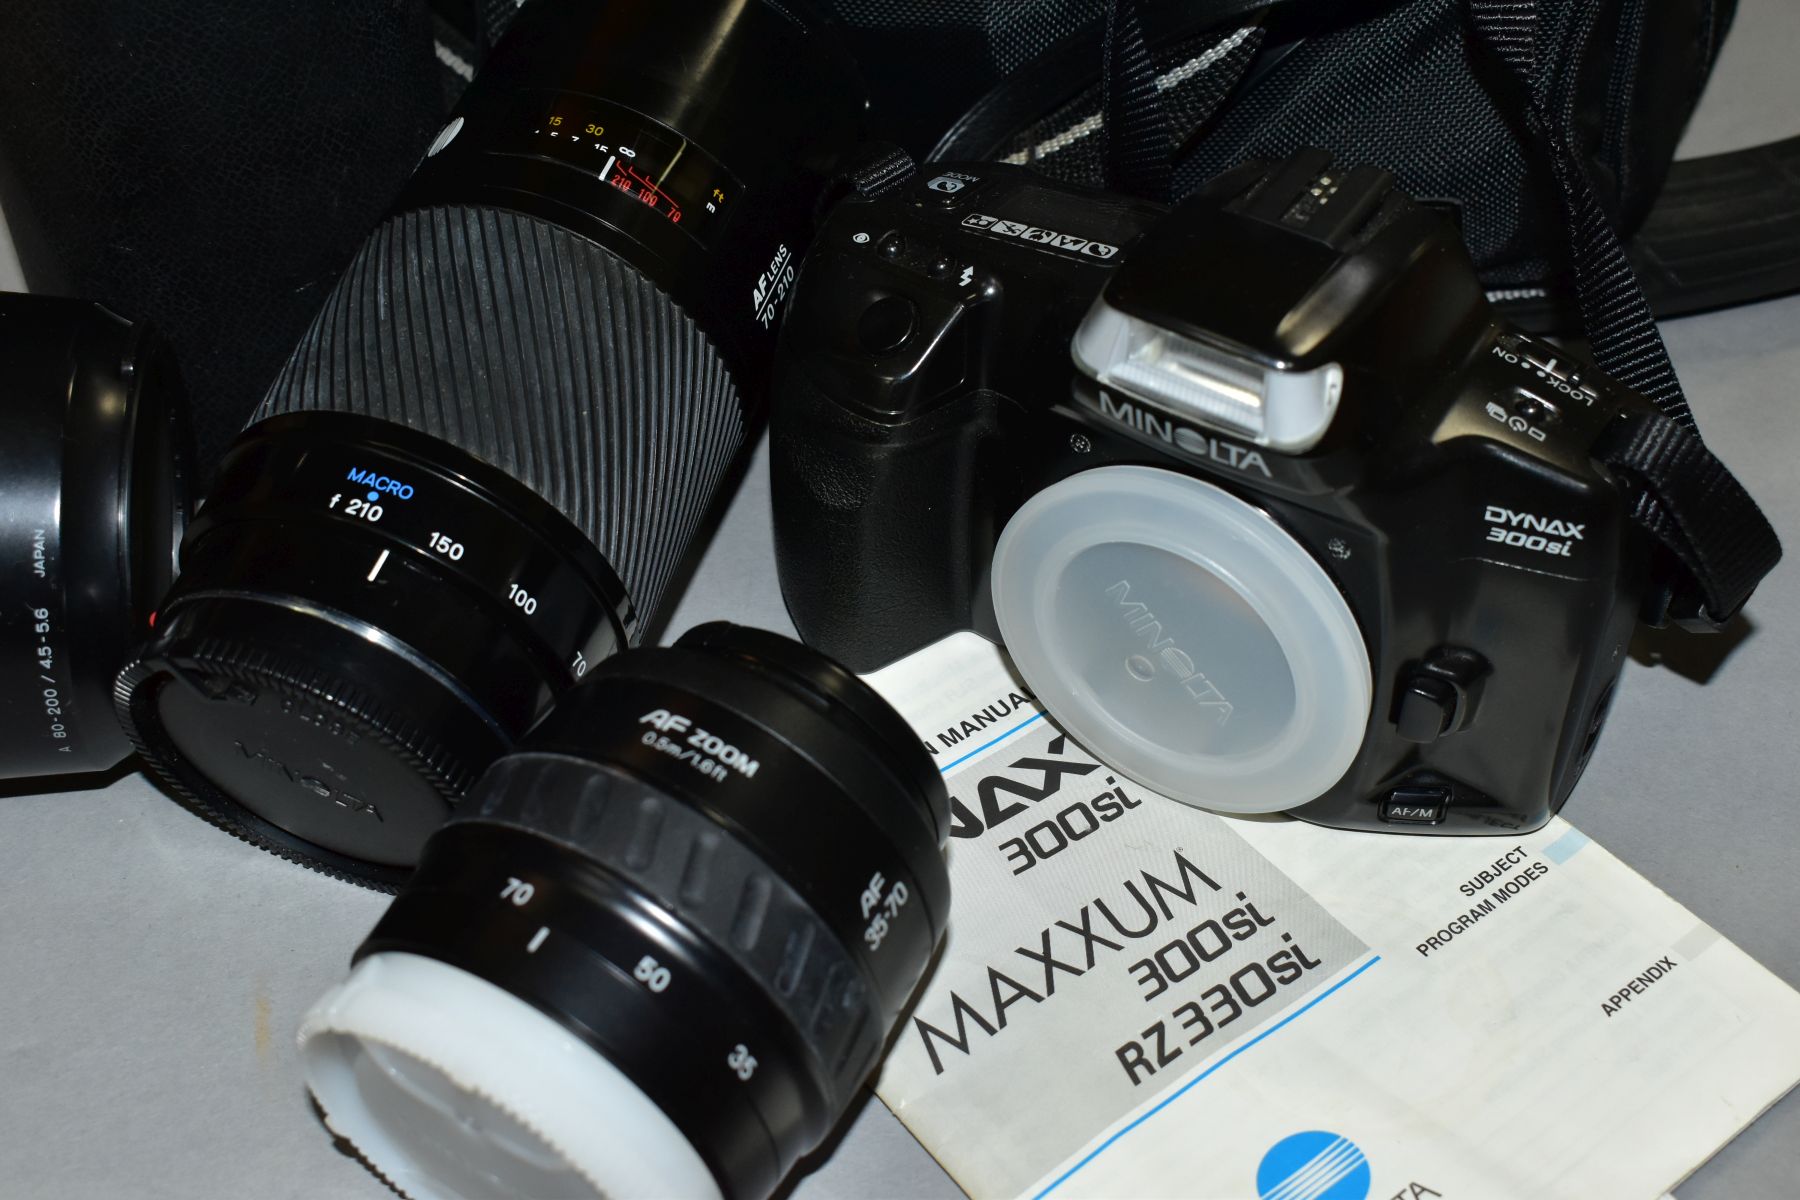 PHOTOGRAPHIC EQUIPMENT comprising a Minolta Dynax 300SI camera body, Minolta 35-70 zoom lens, - Image 2 of 9